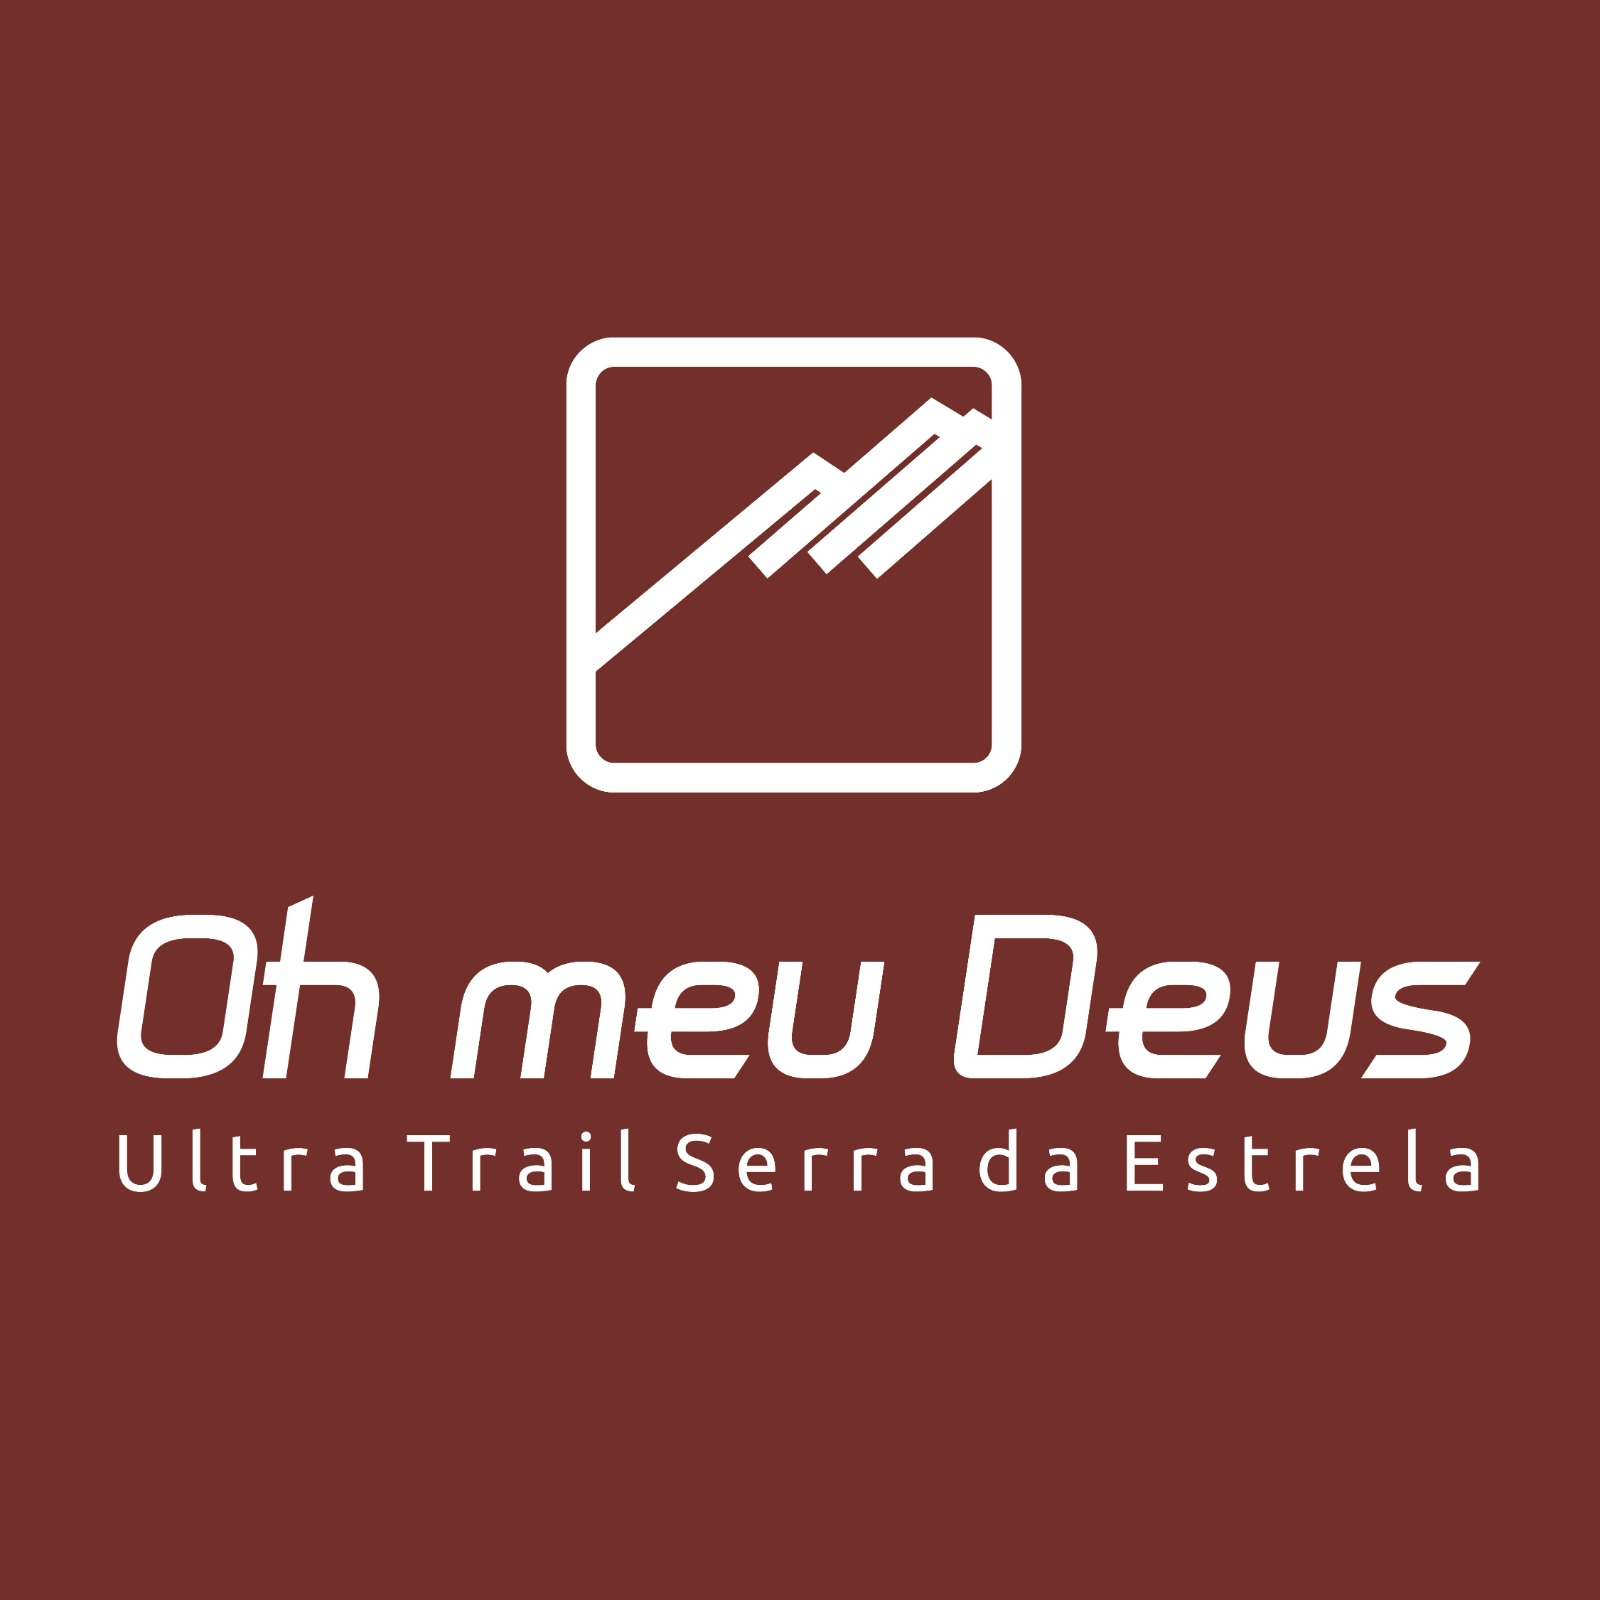 Oh Meu Deus Ultra Trail Serra da Estrela logo on RaceRaves